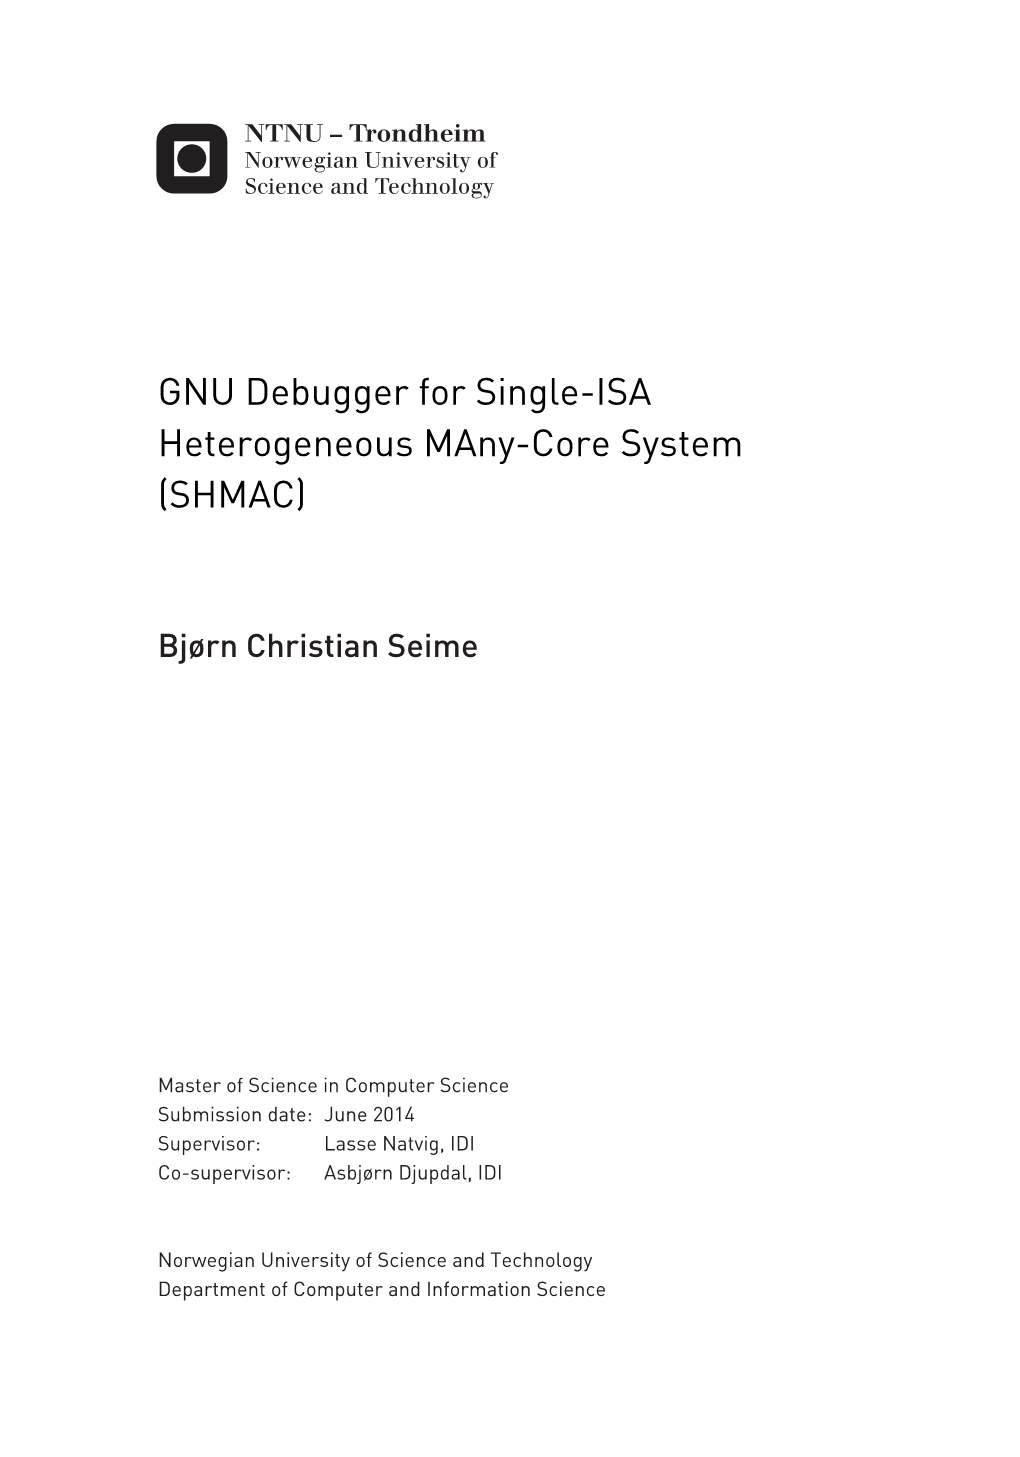 GNU Debugger for Single-ISA Heterogeneous Many-Core System (SHMAC)